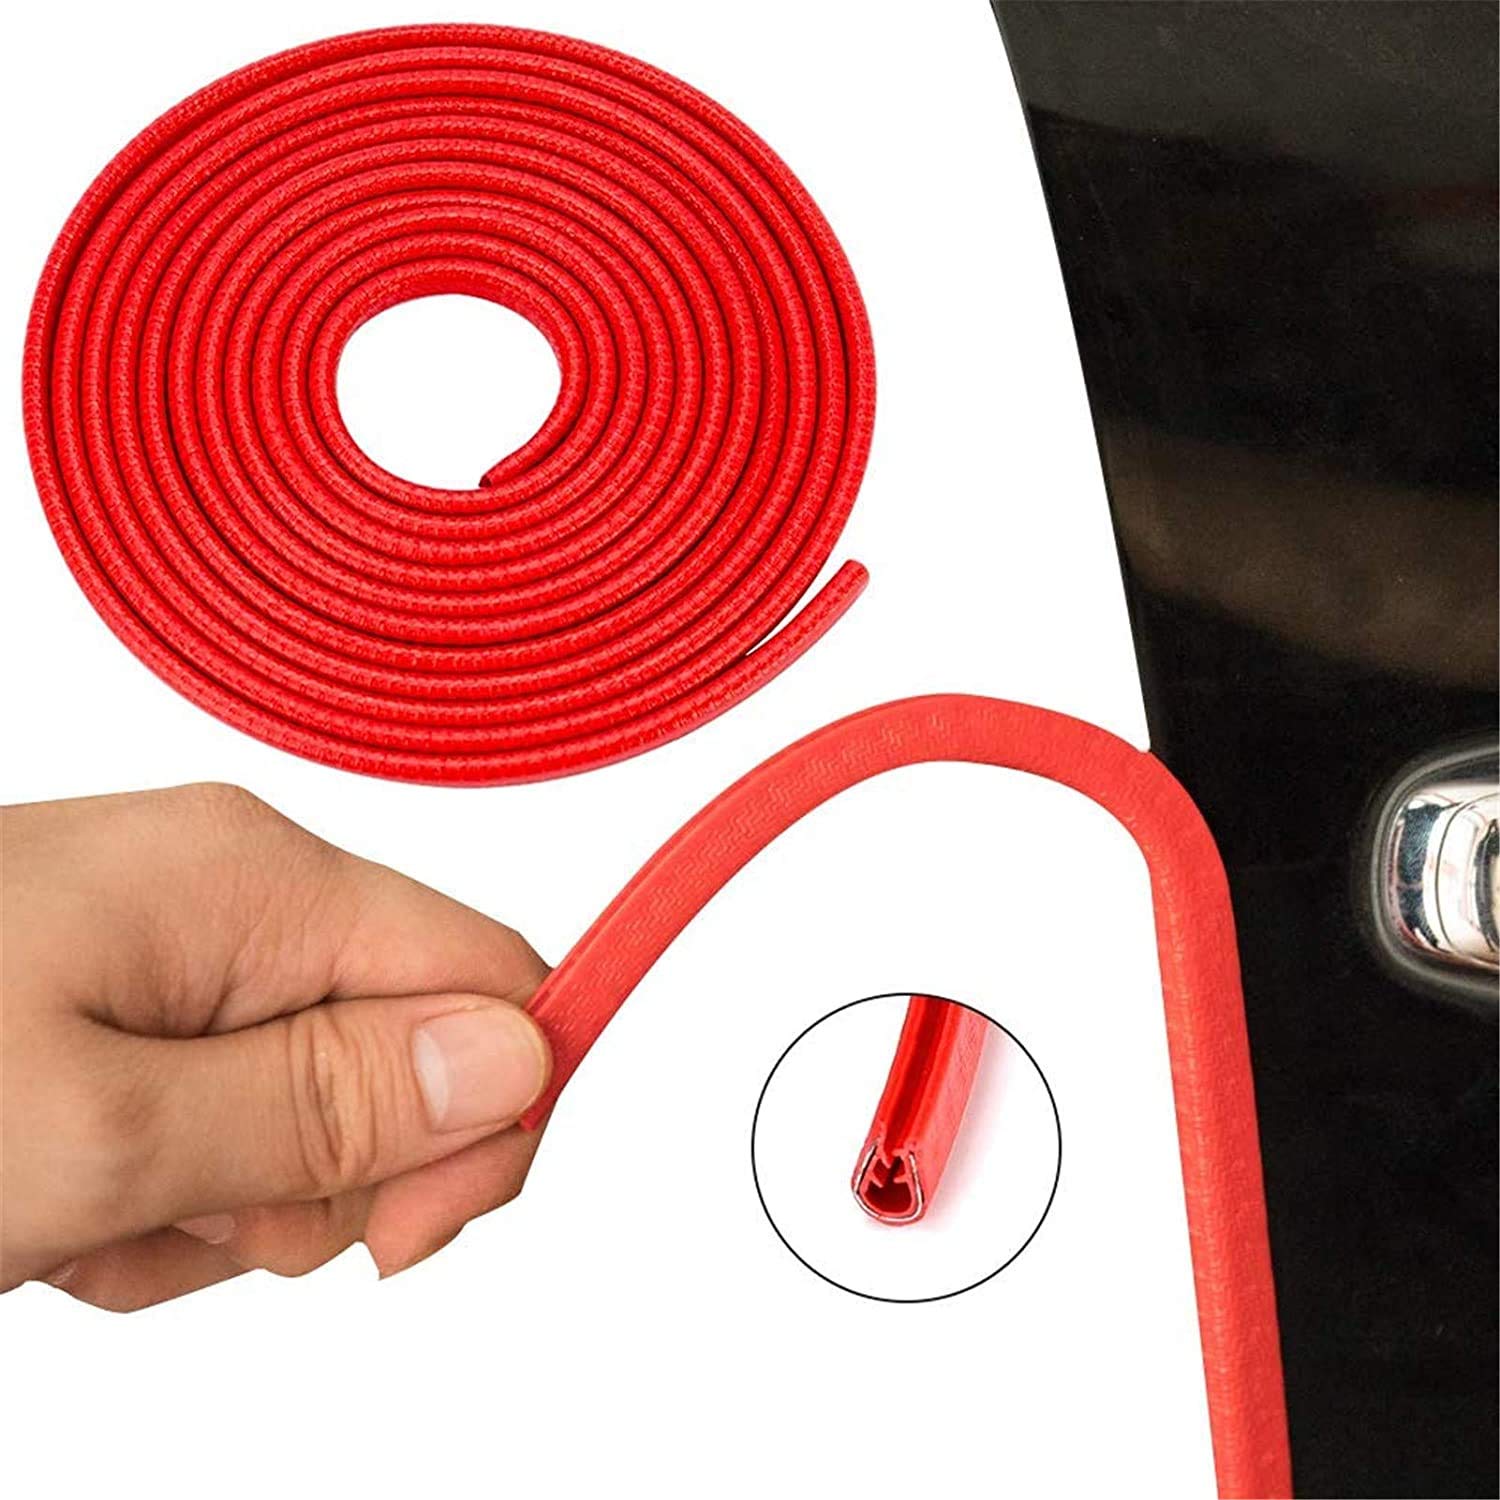 Car Oxygen - U Shape Edge Trim Rubber Strip Seal Protector Car Door Guards (16 ft/5 m )